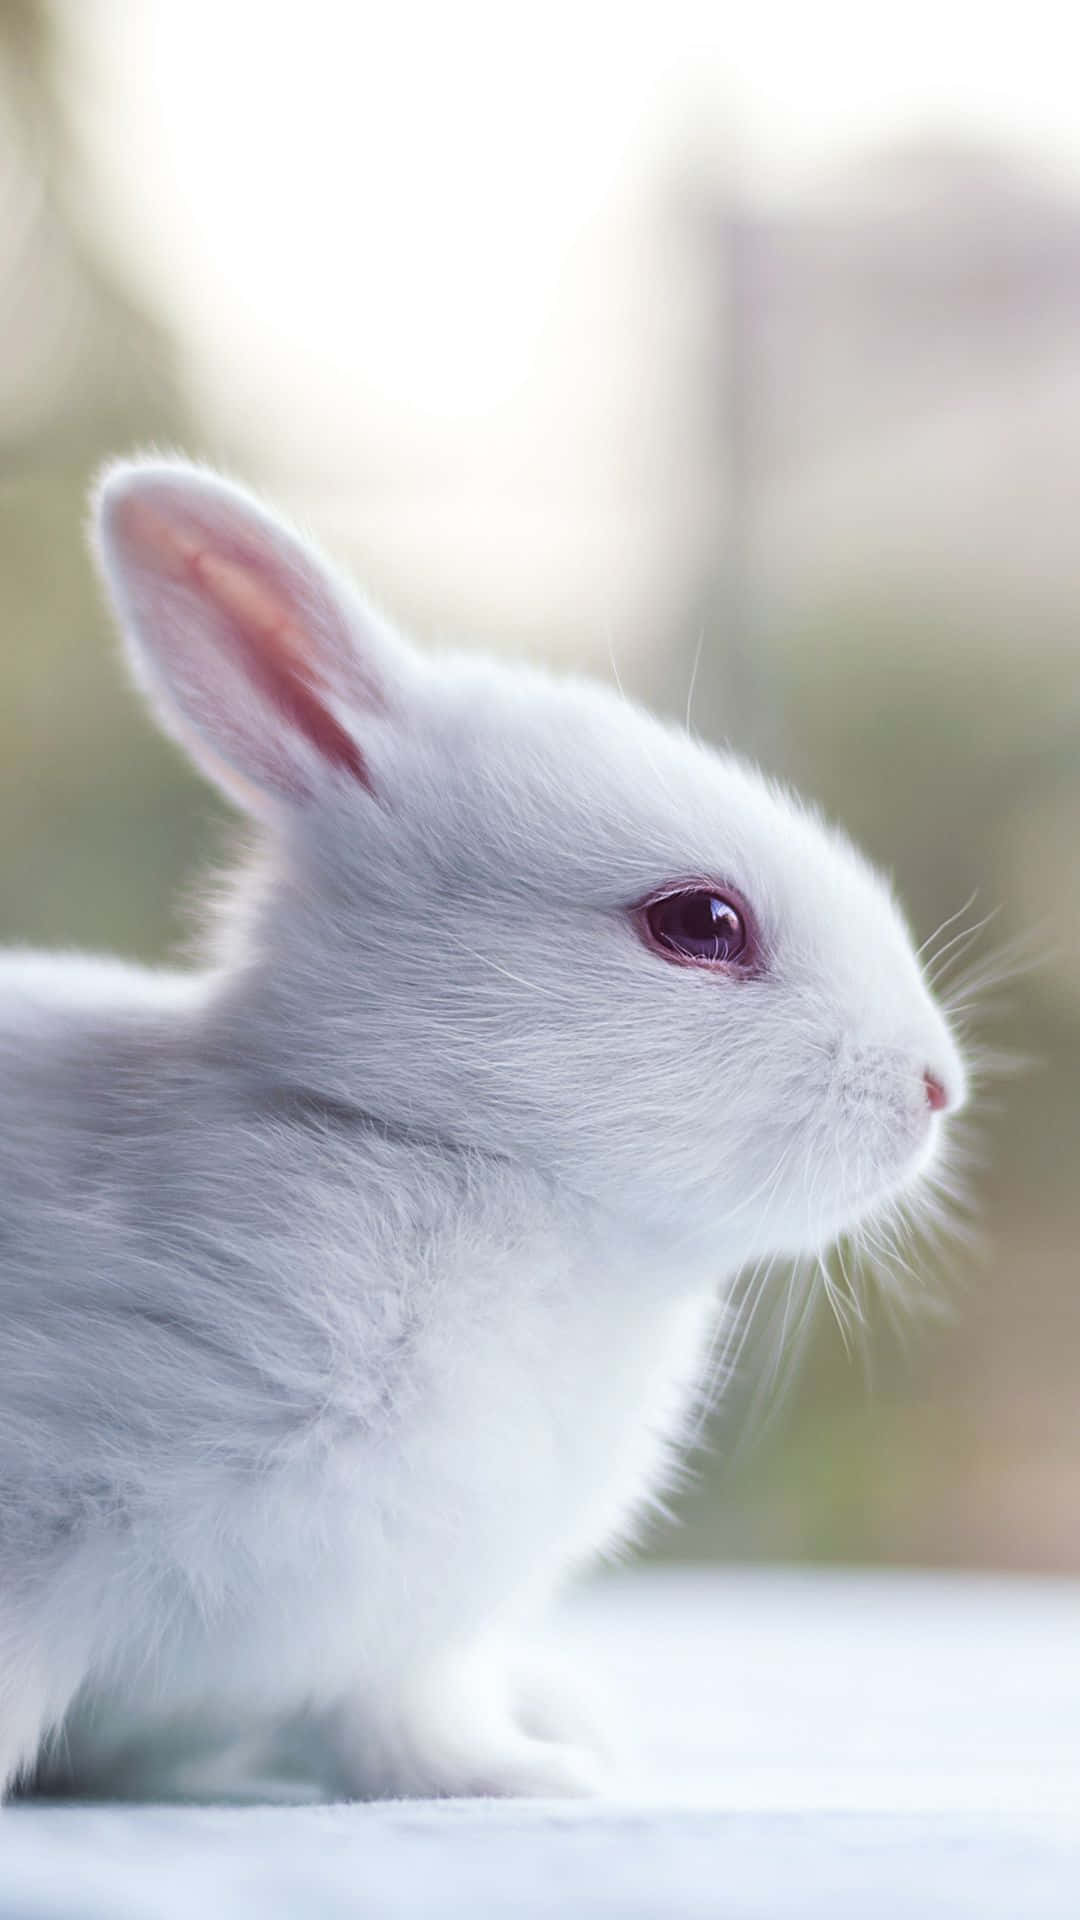 hvide kaniner, søde, søde kaniner, søde kaniner, søde kaniner, søde kaniner, søde kaniner, søde kaniner, sød kanin Wallpaper